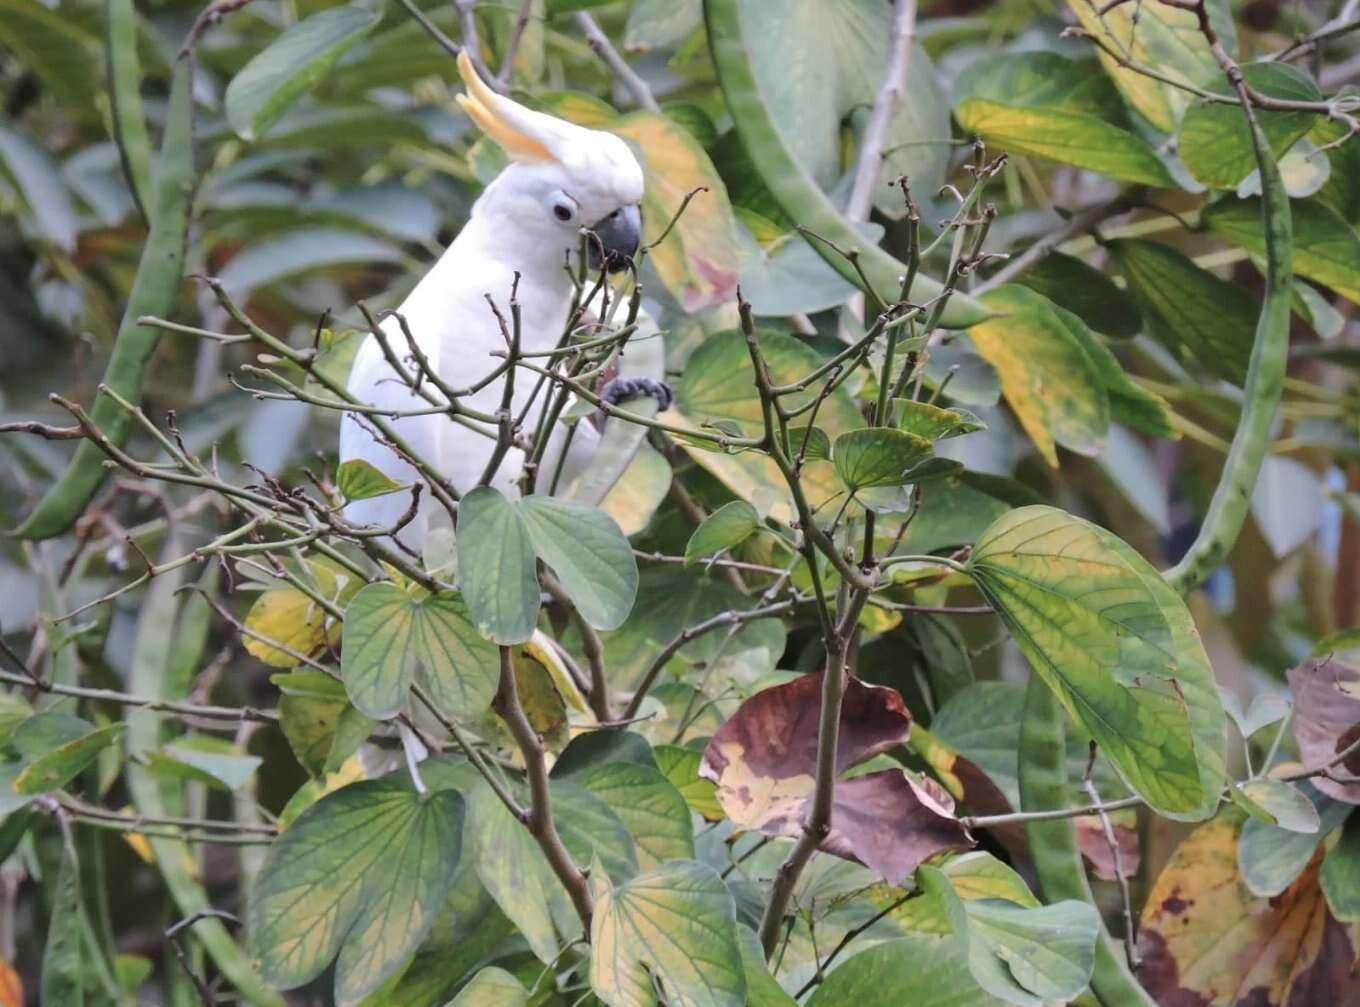 Image of Lesser Sulphur-crested Cockatoo